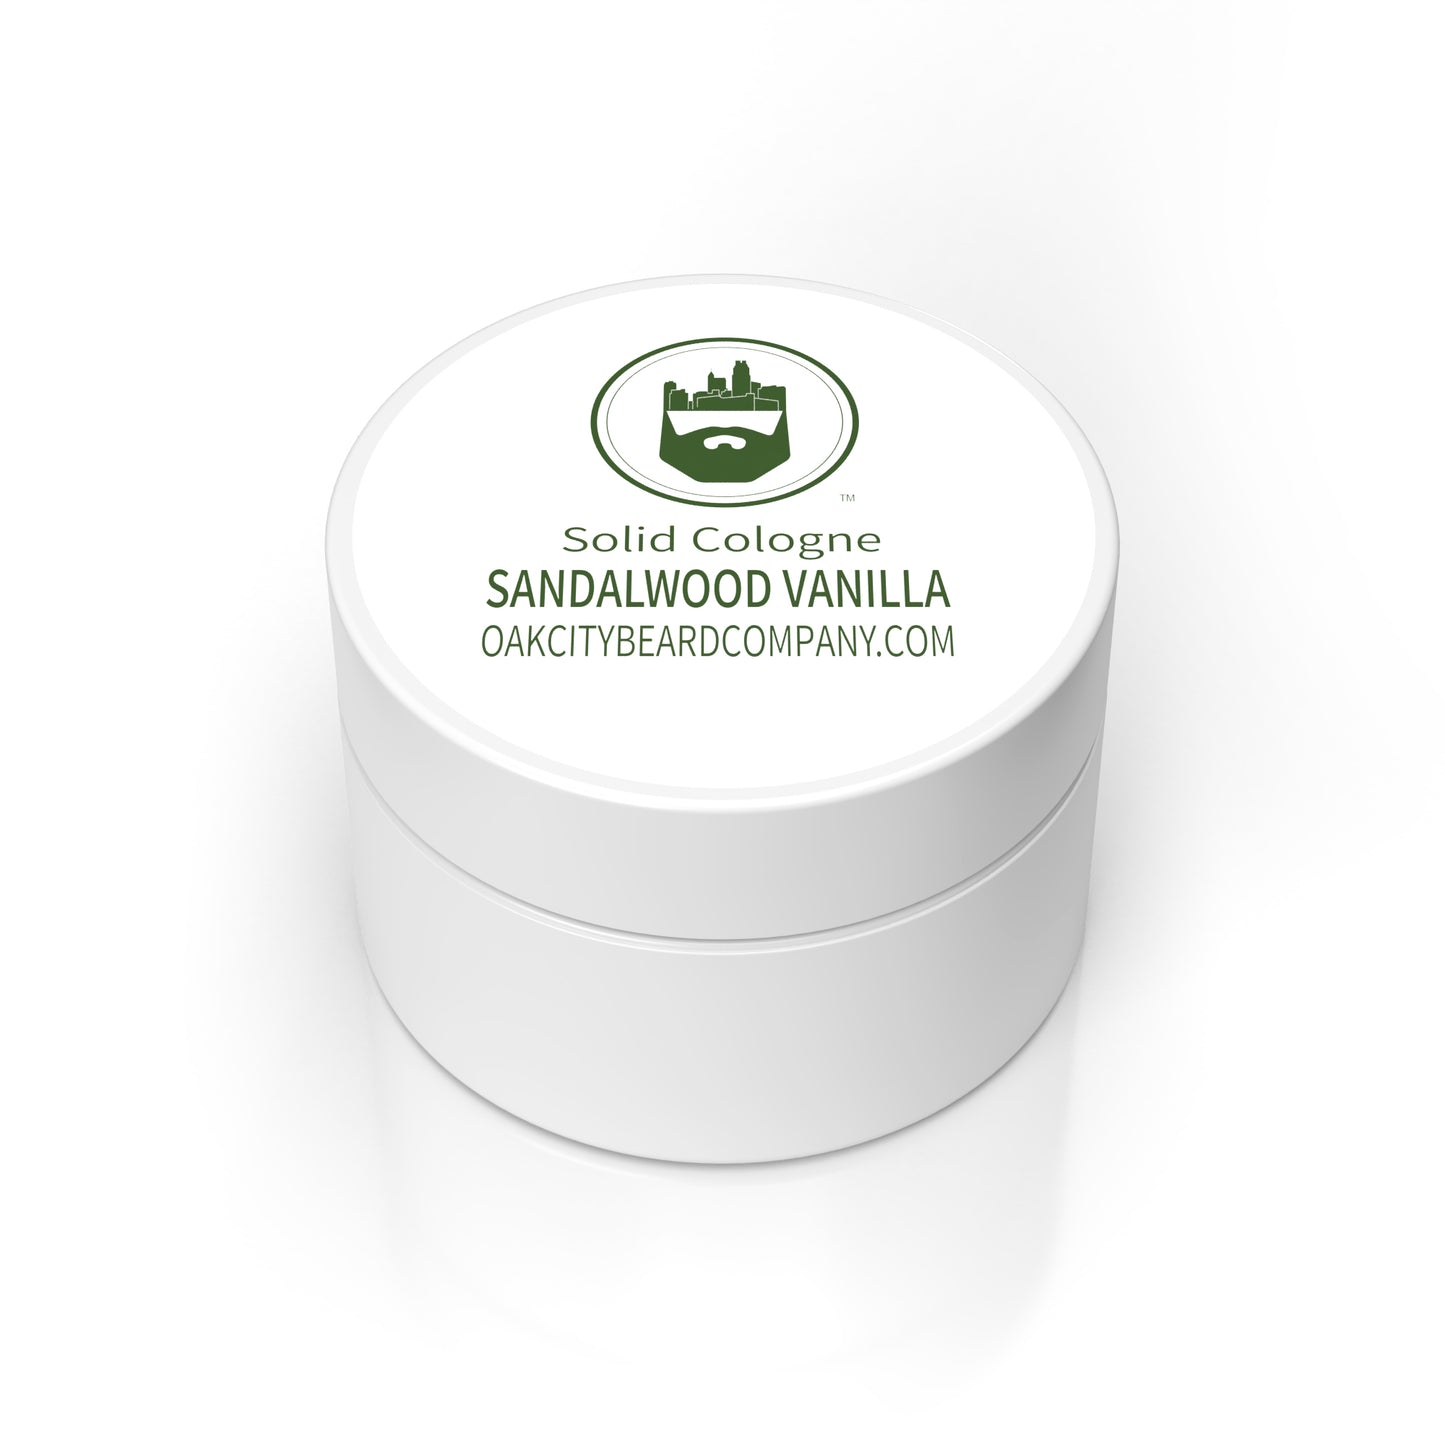 Sandalwood Vanilla (Solid Cologne) by Oak City Beard Company